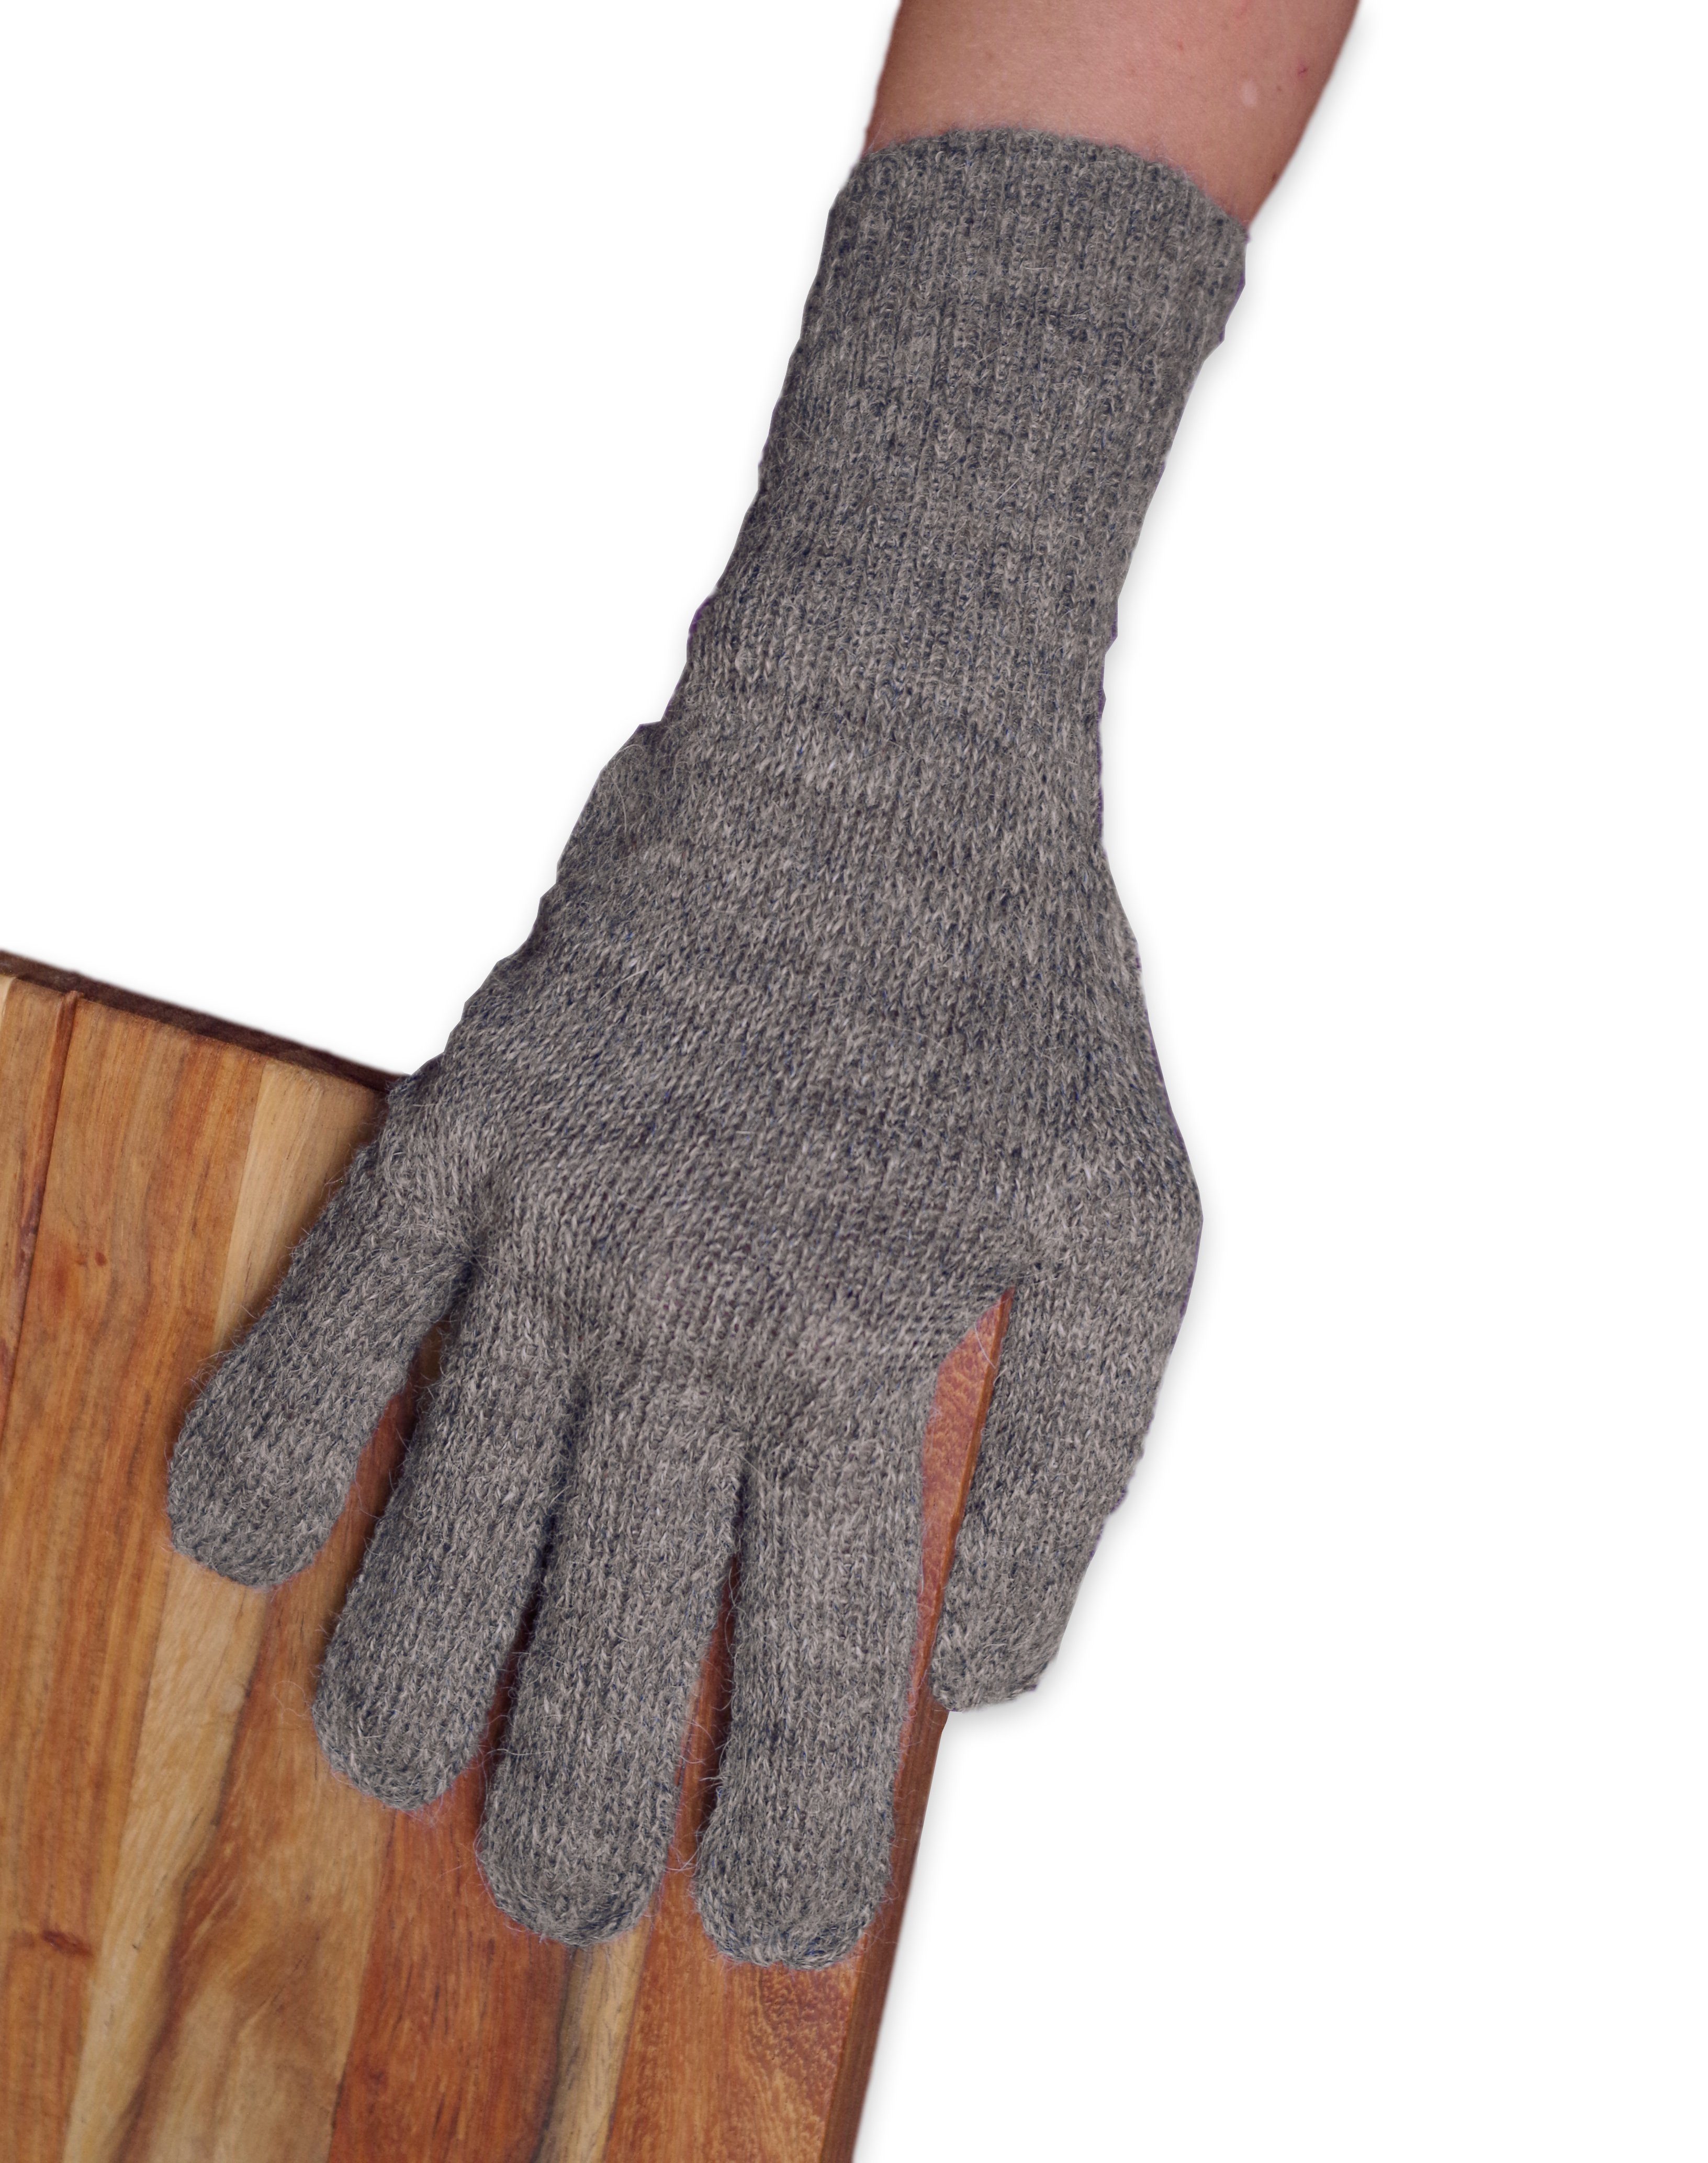 Posh Gear Strickhandschuhe Guantino Alpaka aus Alpakawolle Fingerhandschuhe dunkel grau 100